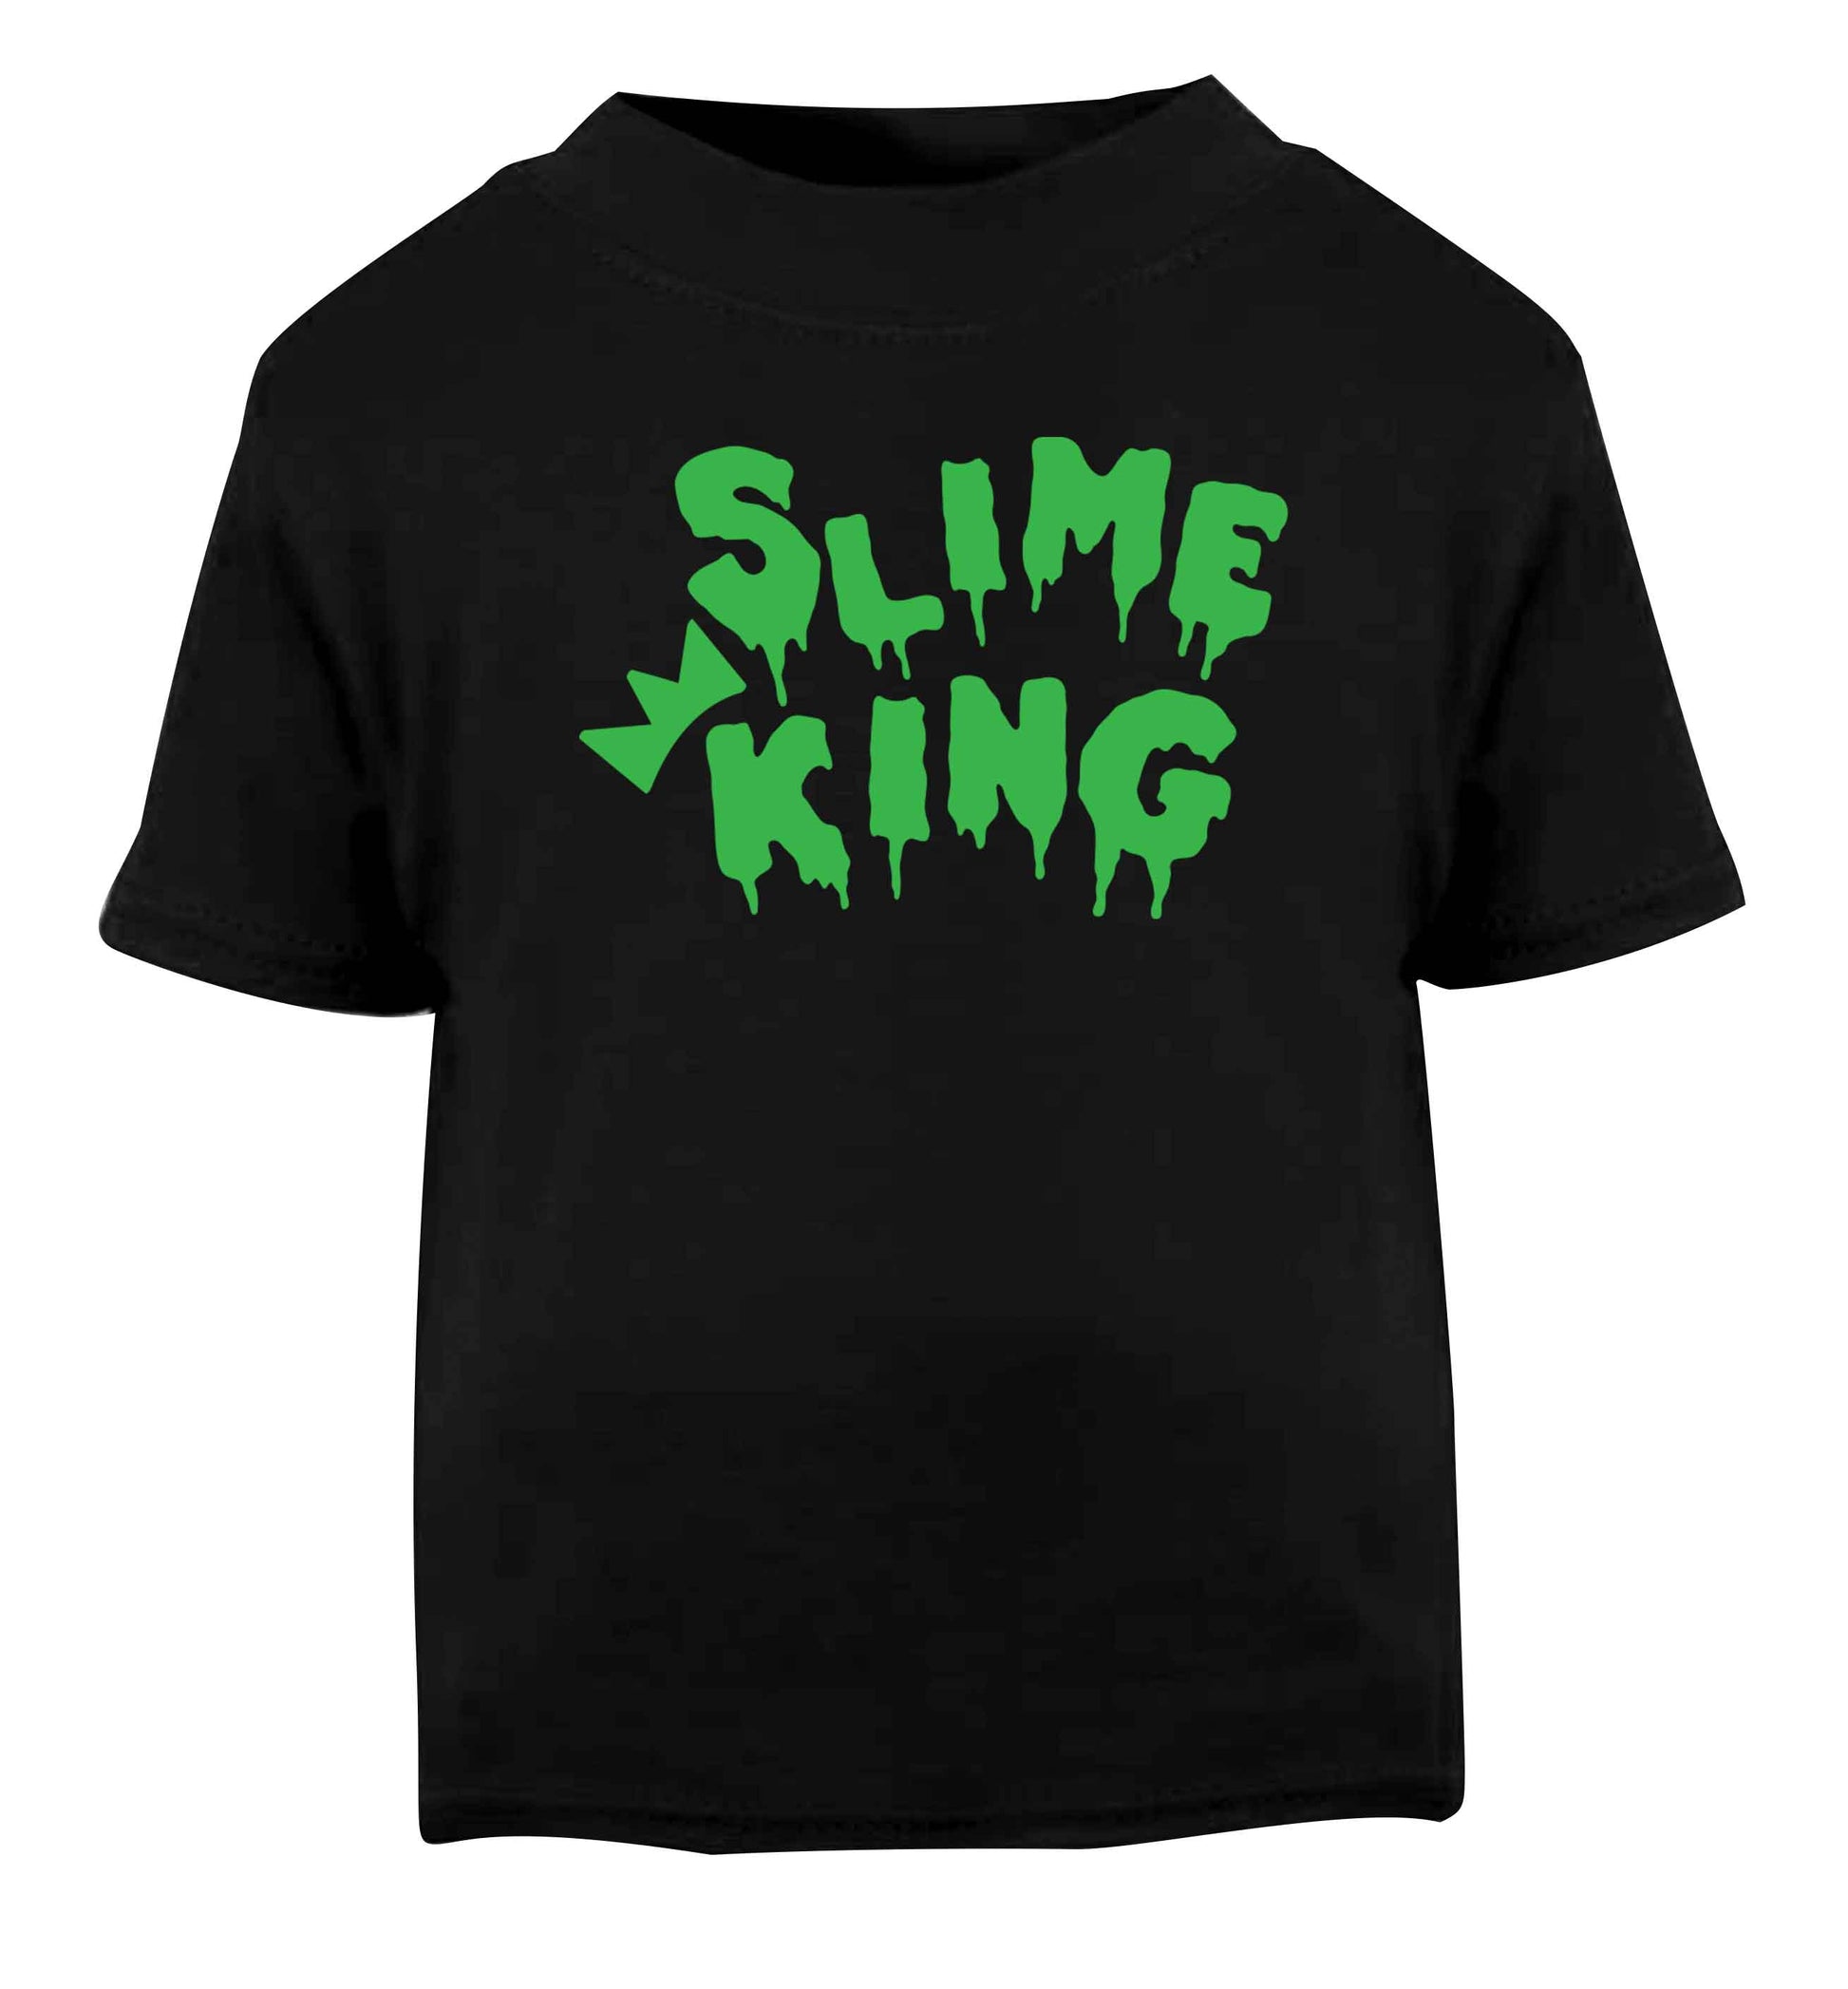 Neon green slime king Black baby toddler Tshirt 2 years